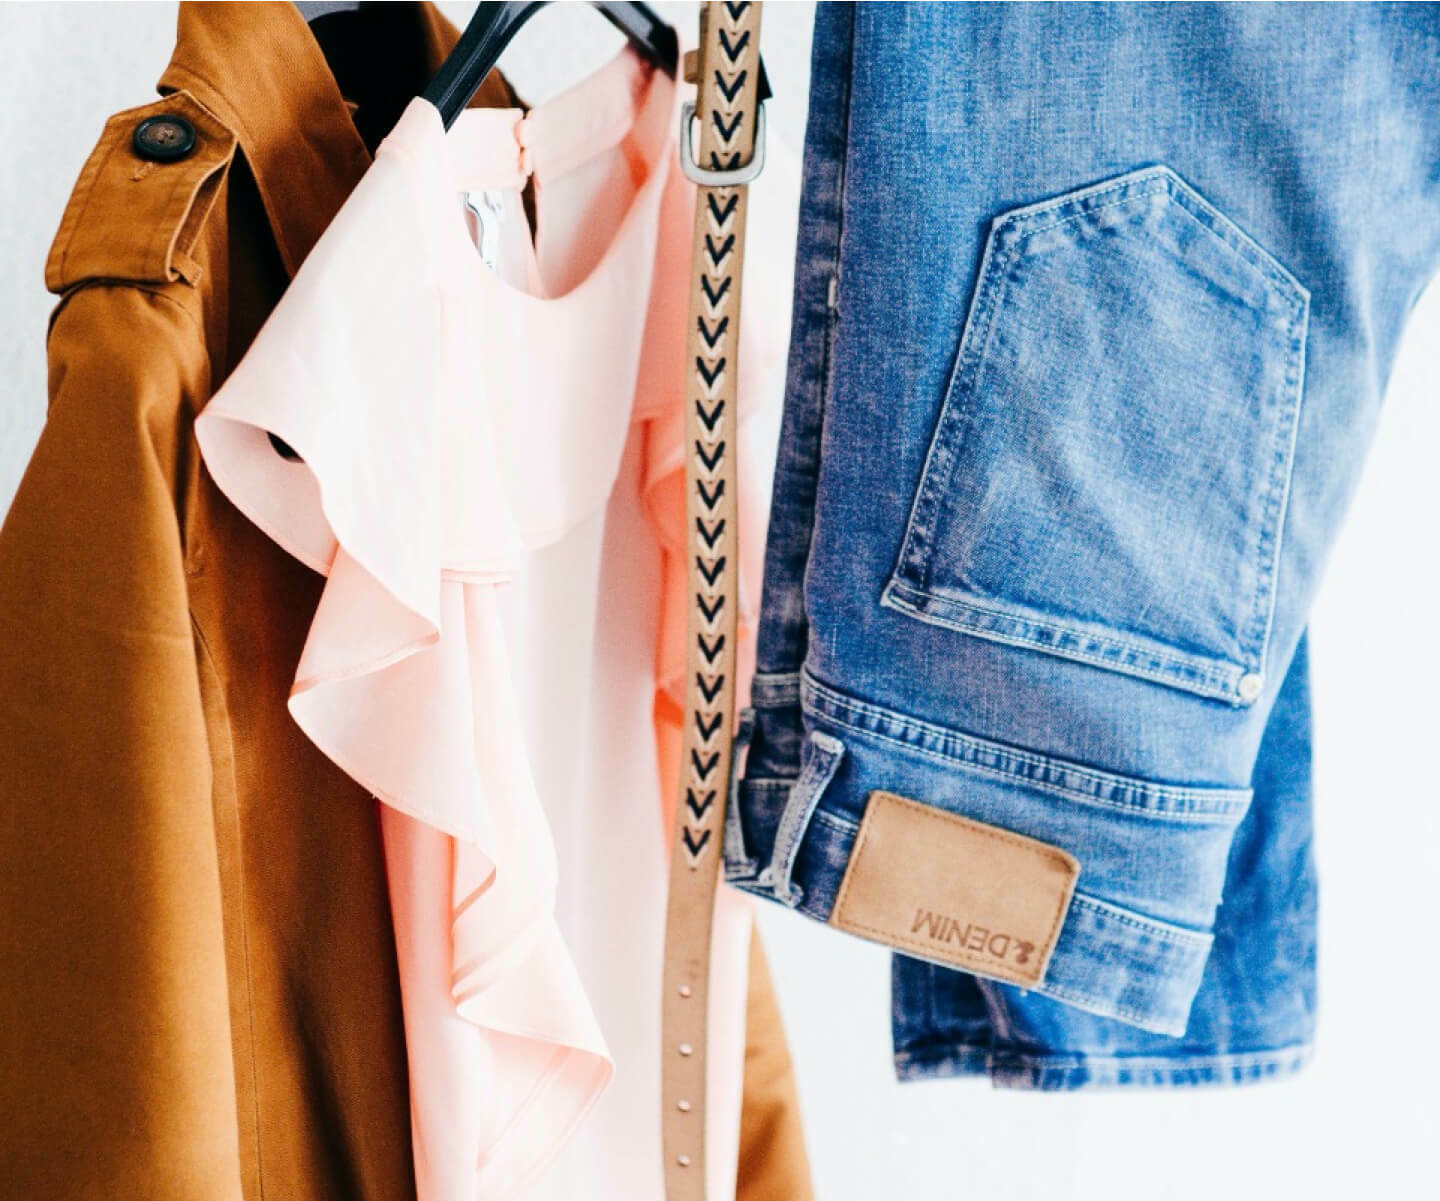 Clothes hanging - Jacket, shirt, denim jeans and a belt